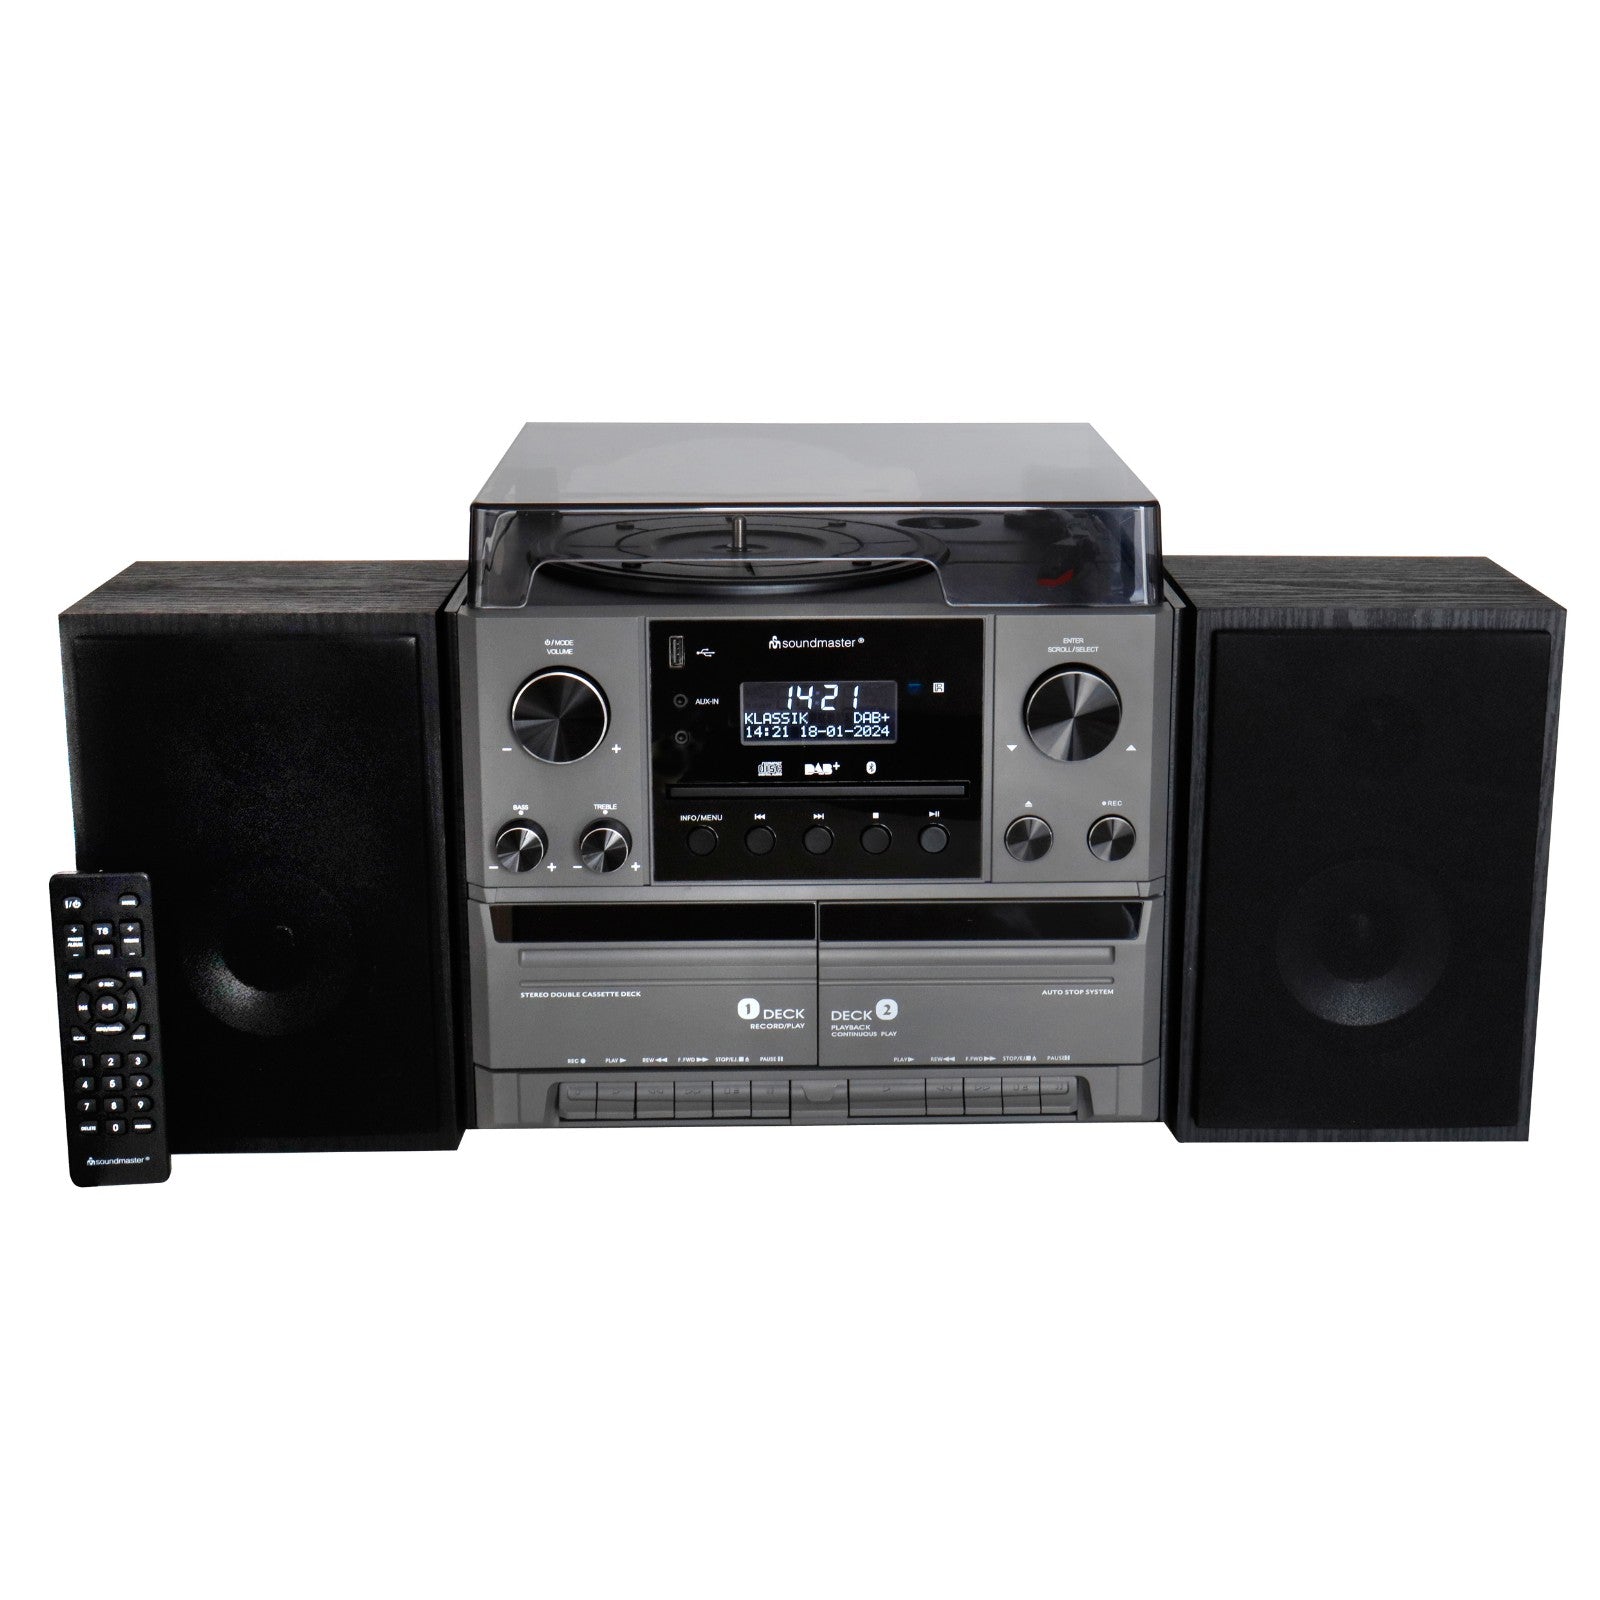 Soundmaster MCD5600 Stereoanlage mit Plattenspieler DAB